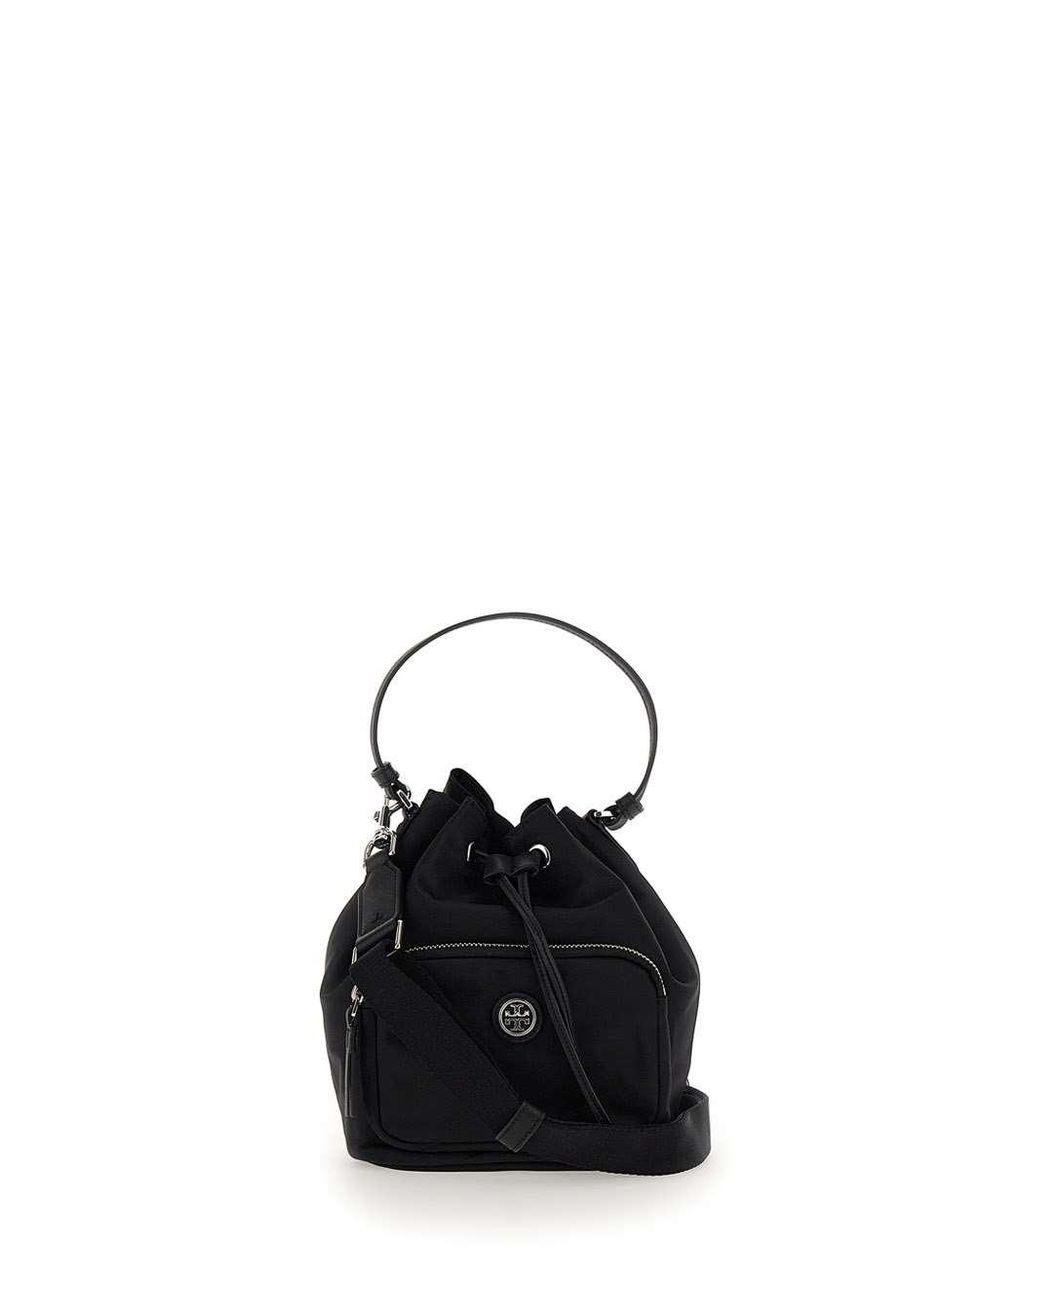 Tory Burch Leather Virginia Bucket Bag Shoulder Bag in Black | Lyst